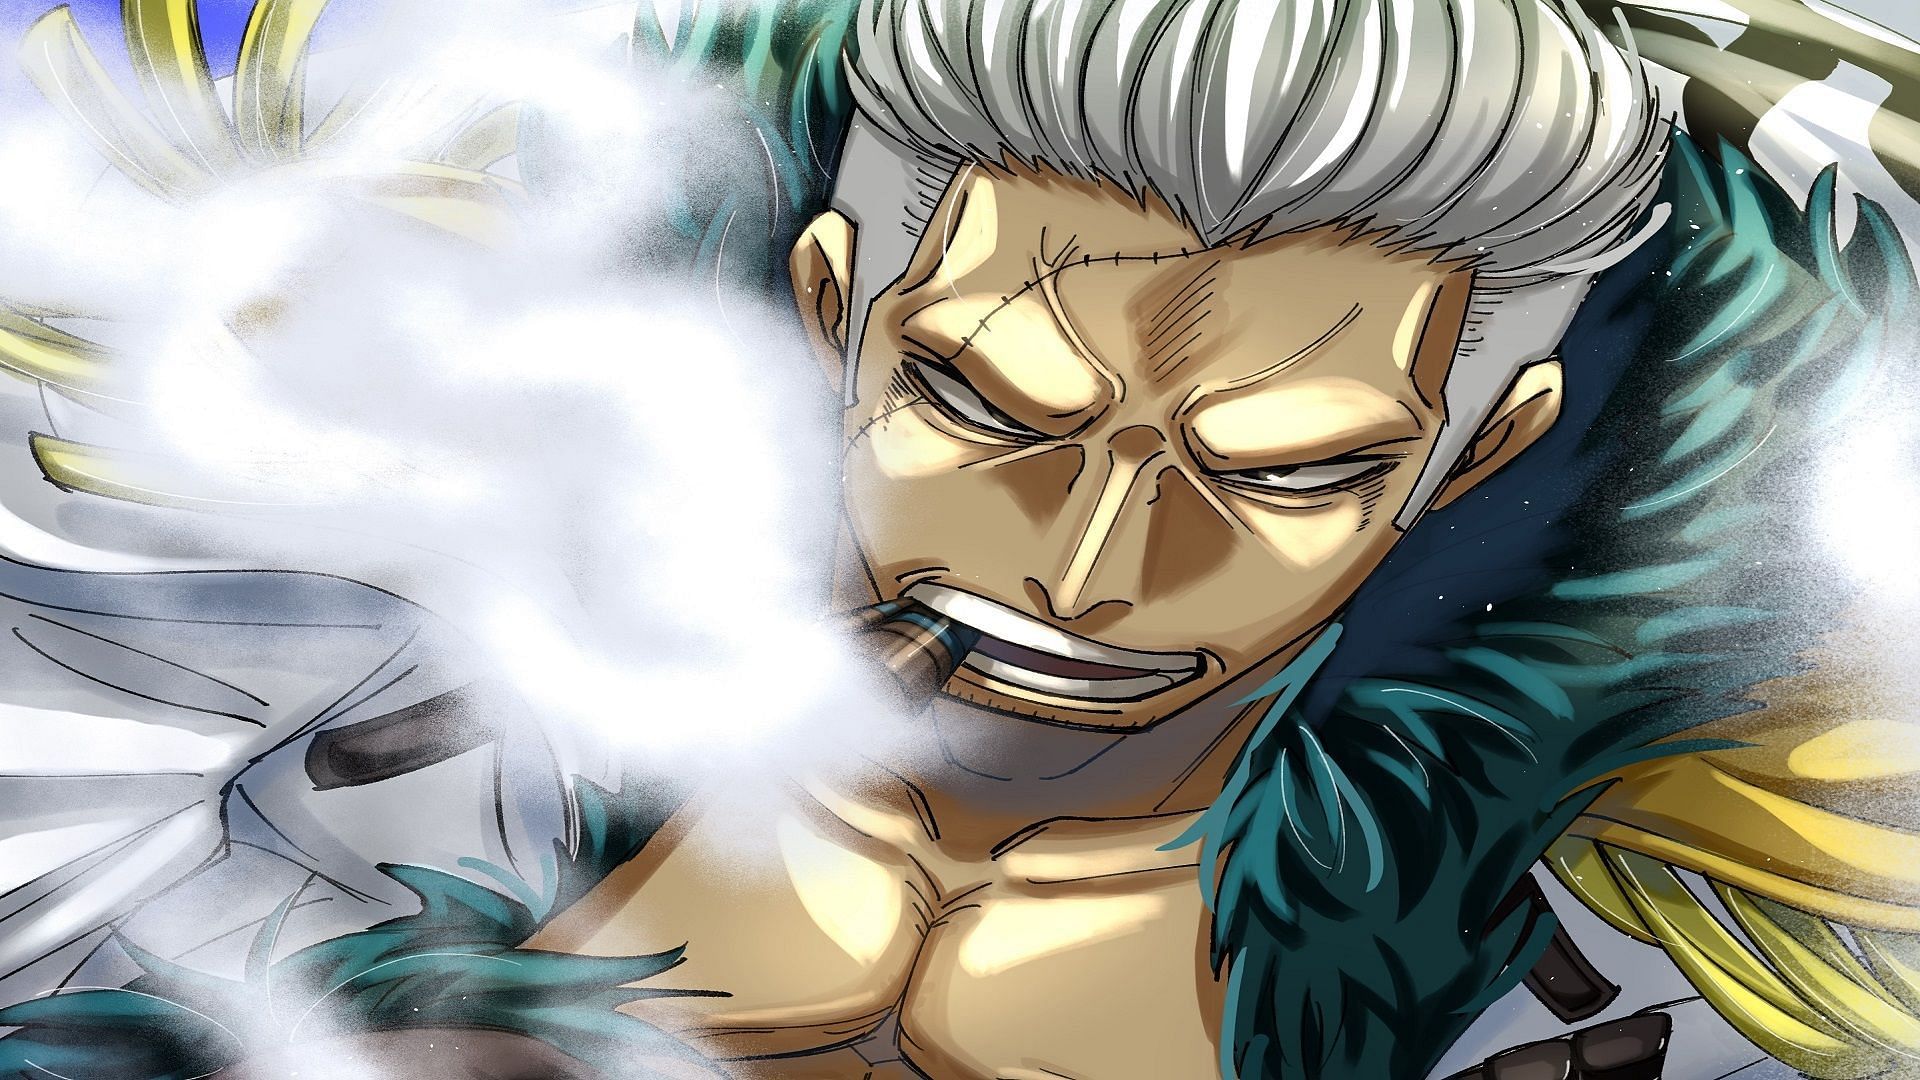 Smoker is a Marine officer and an old acquaintance of the Strawhats (Image via Eiichiro Oda/Shueisha, One Piece)